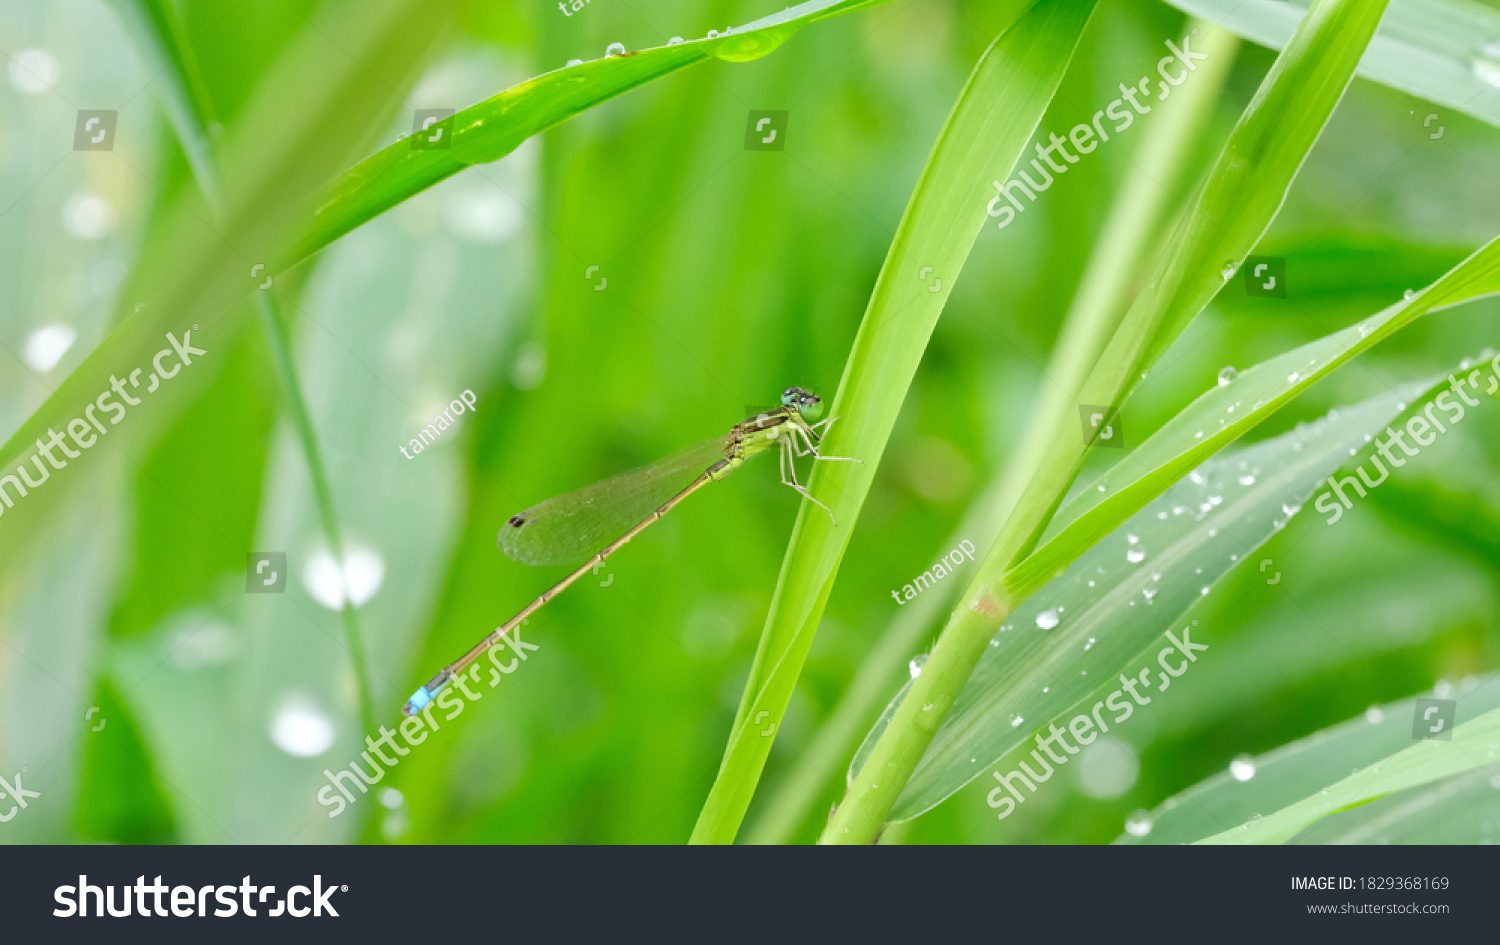 Damsel Flies on the grass #1829368169